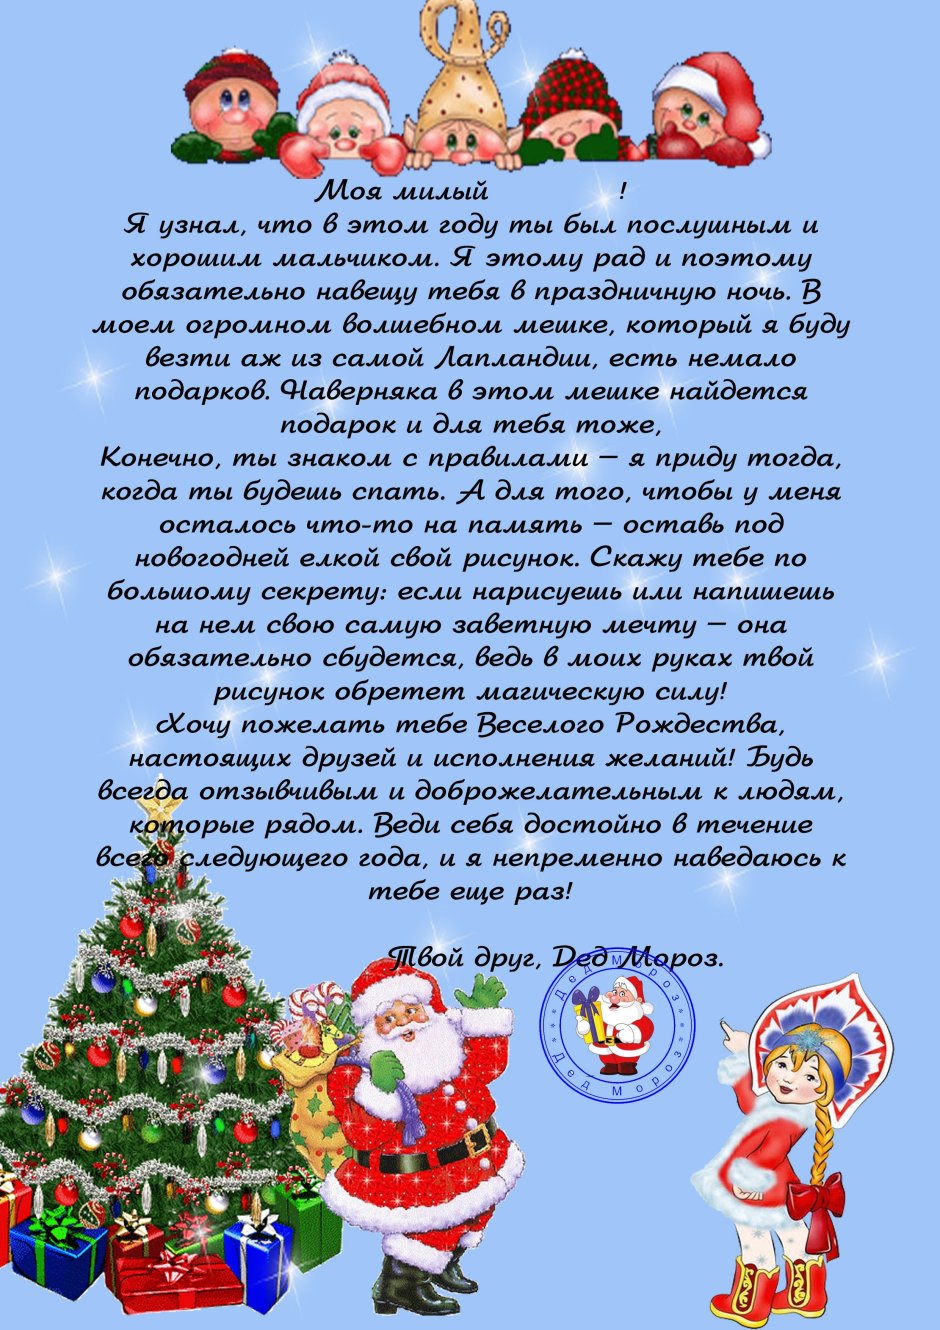 Письмо Деда Мороза для адвент календаря